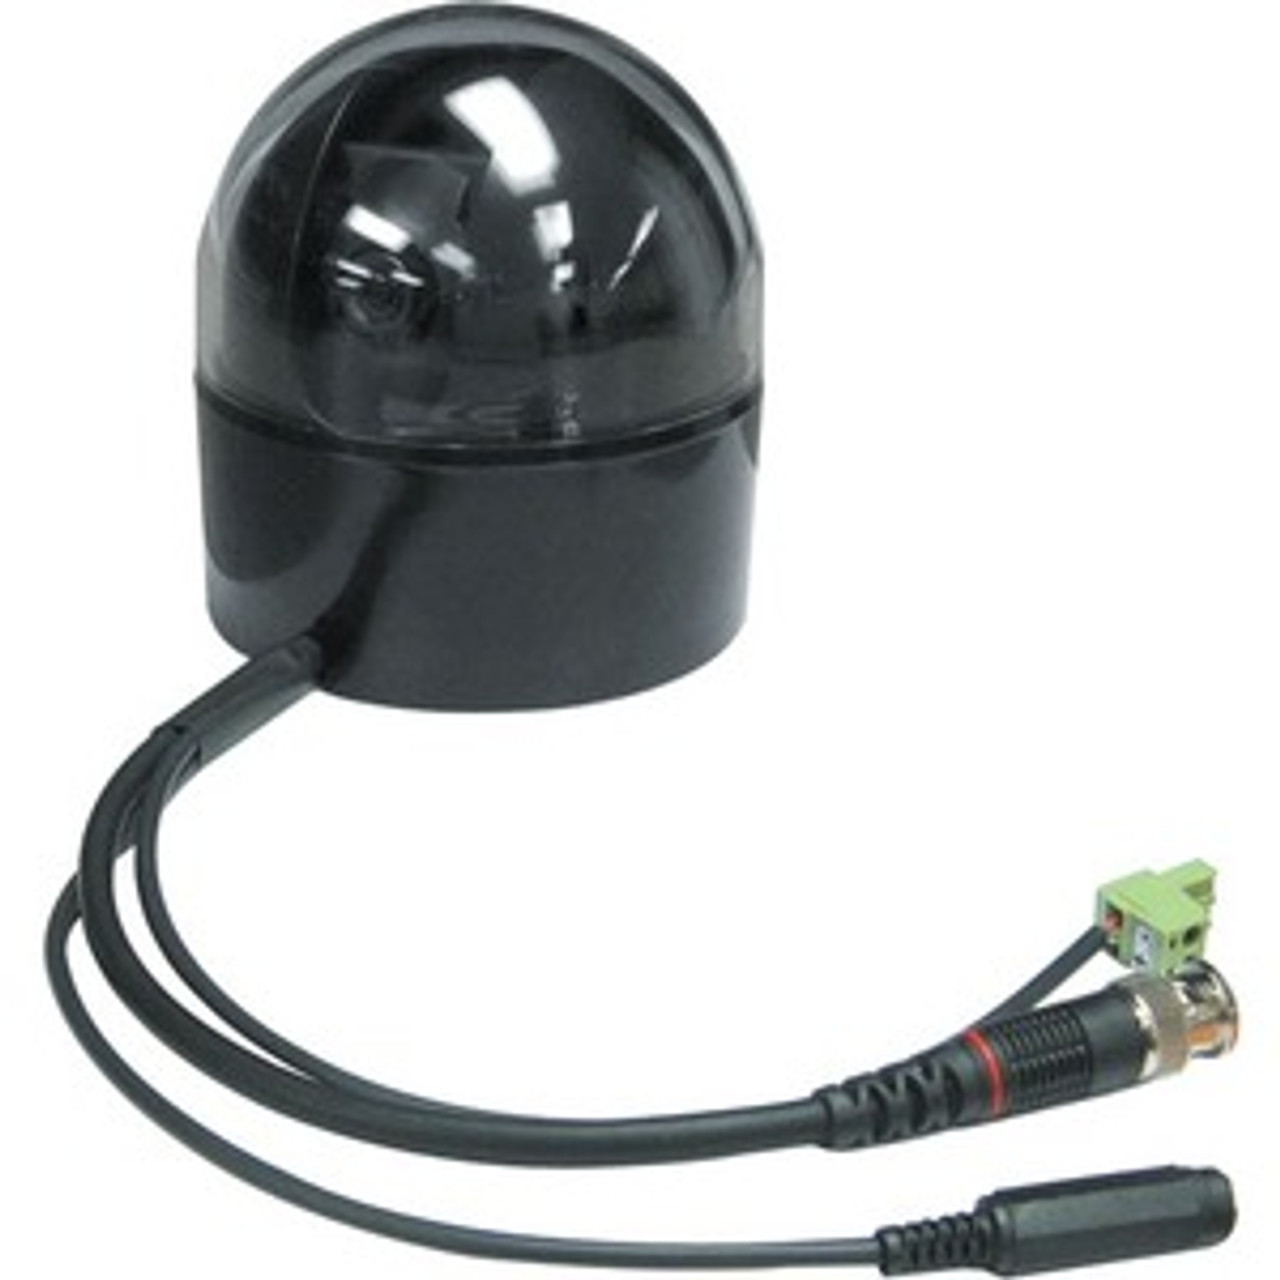 SCA201 Black Box NIB-AlertWerks PT Dome Camera